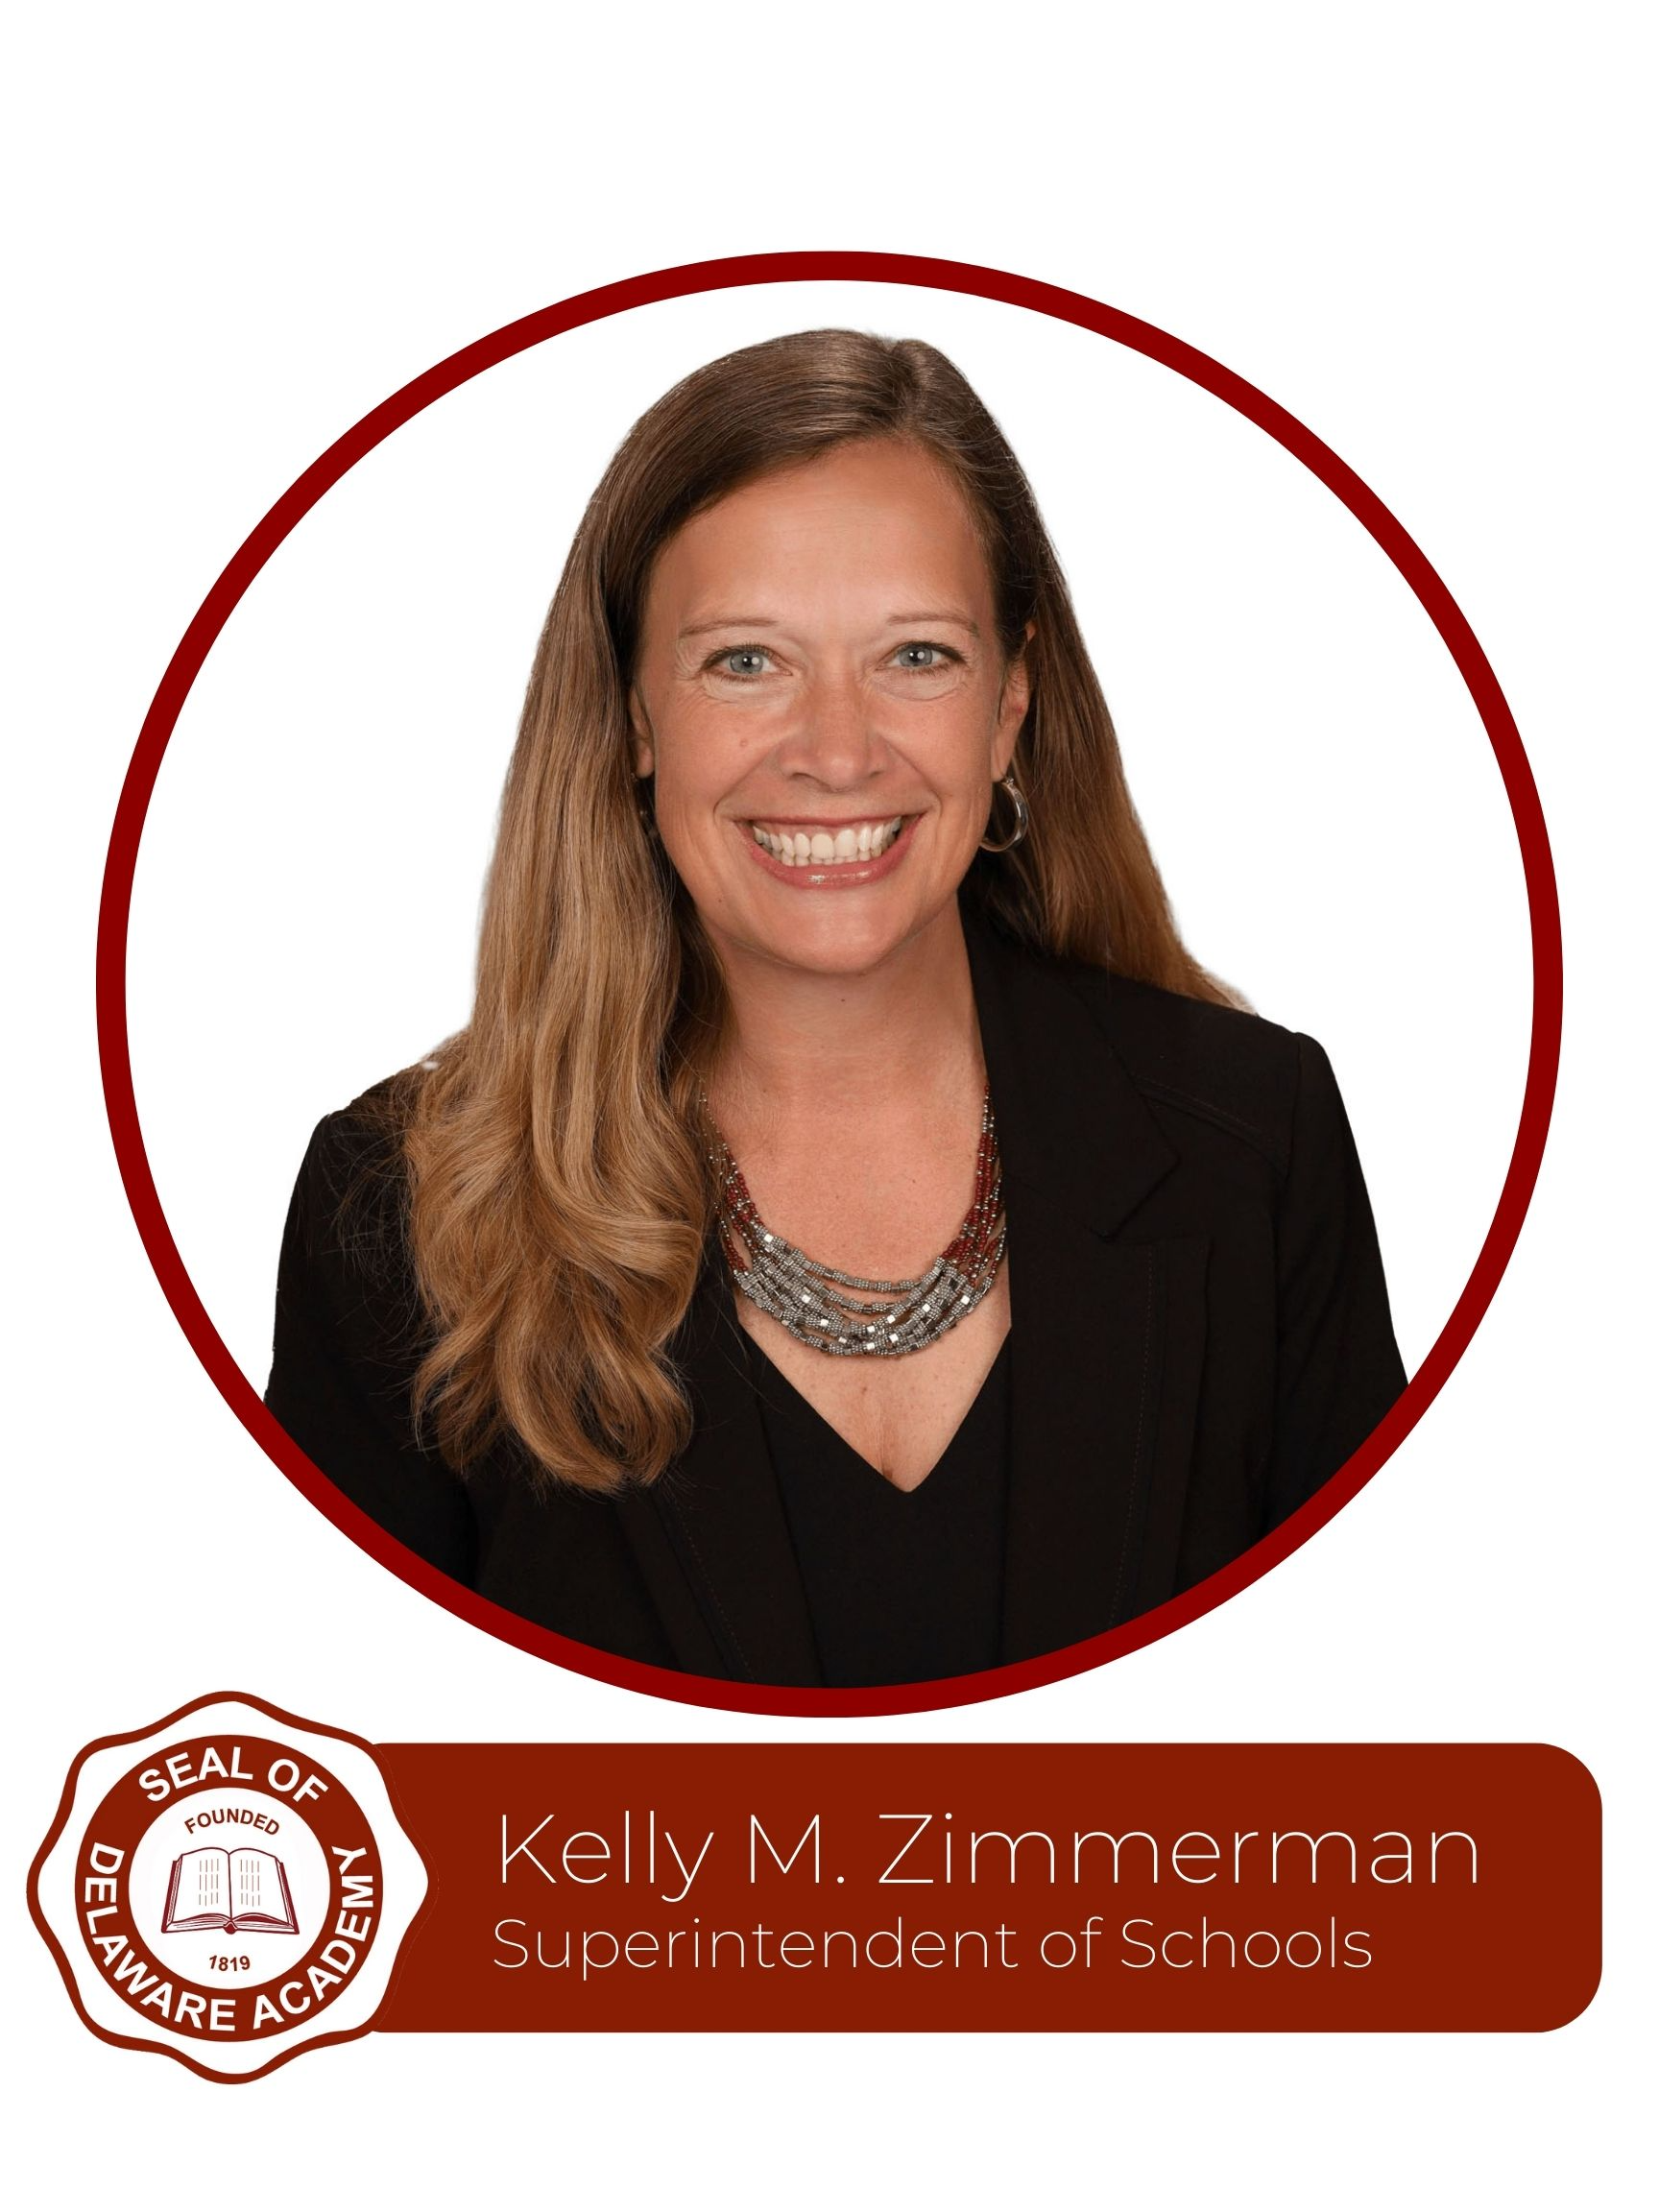 Kelly M. Zimmerman, Superintendent of Schools